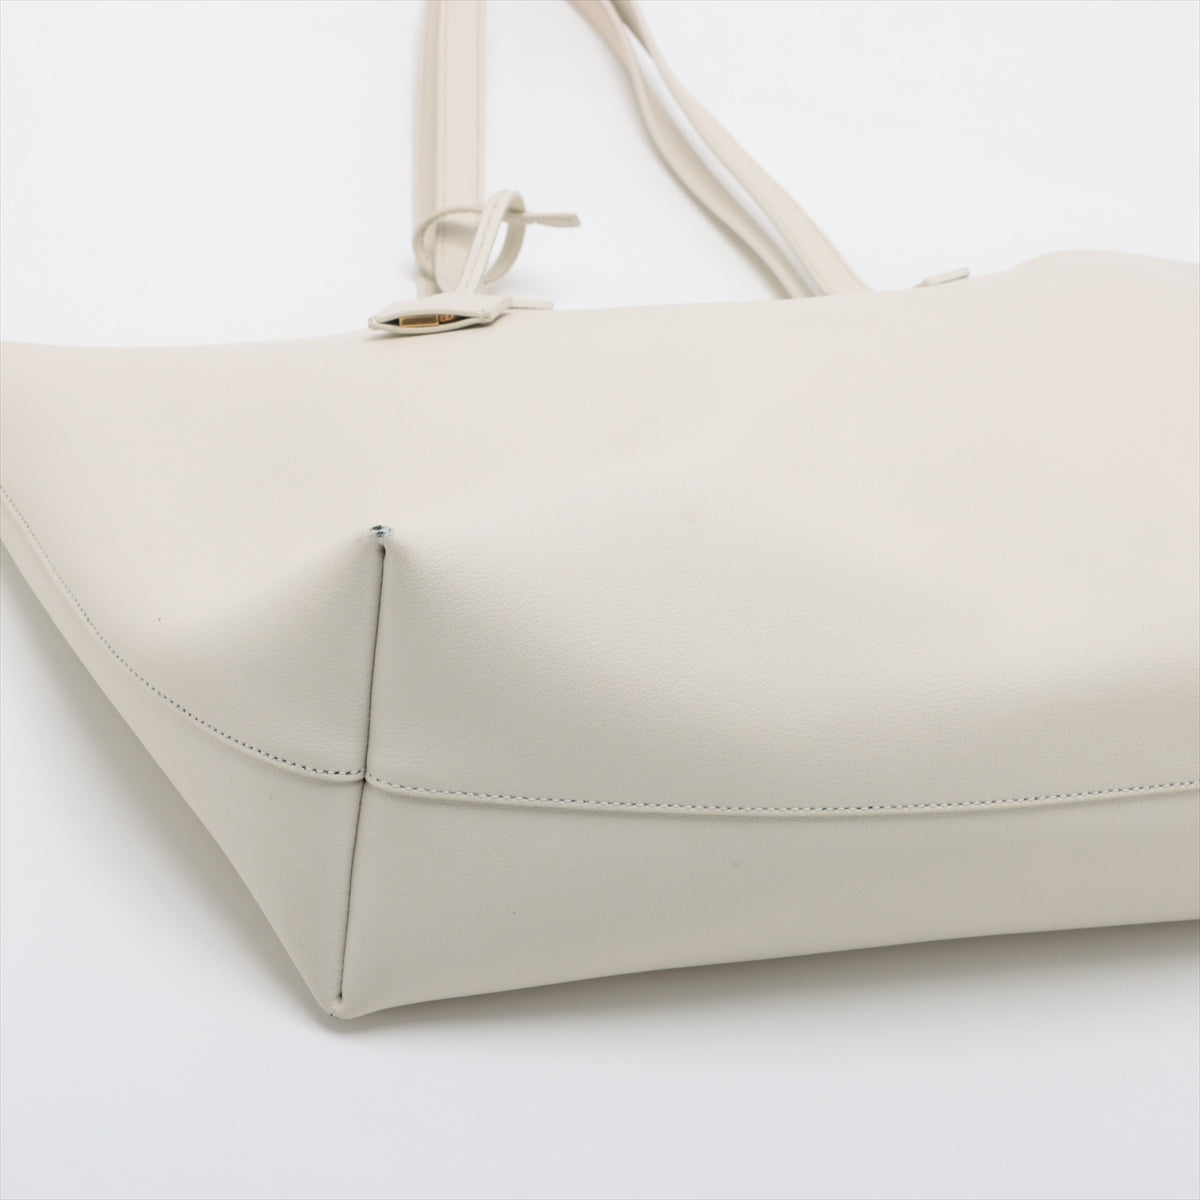 Saint Laurent Paris Sac Shopping Leather Tote bag White 394195